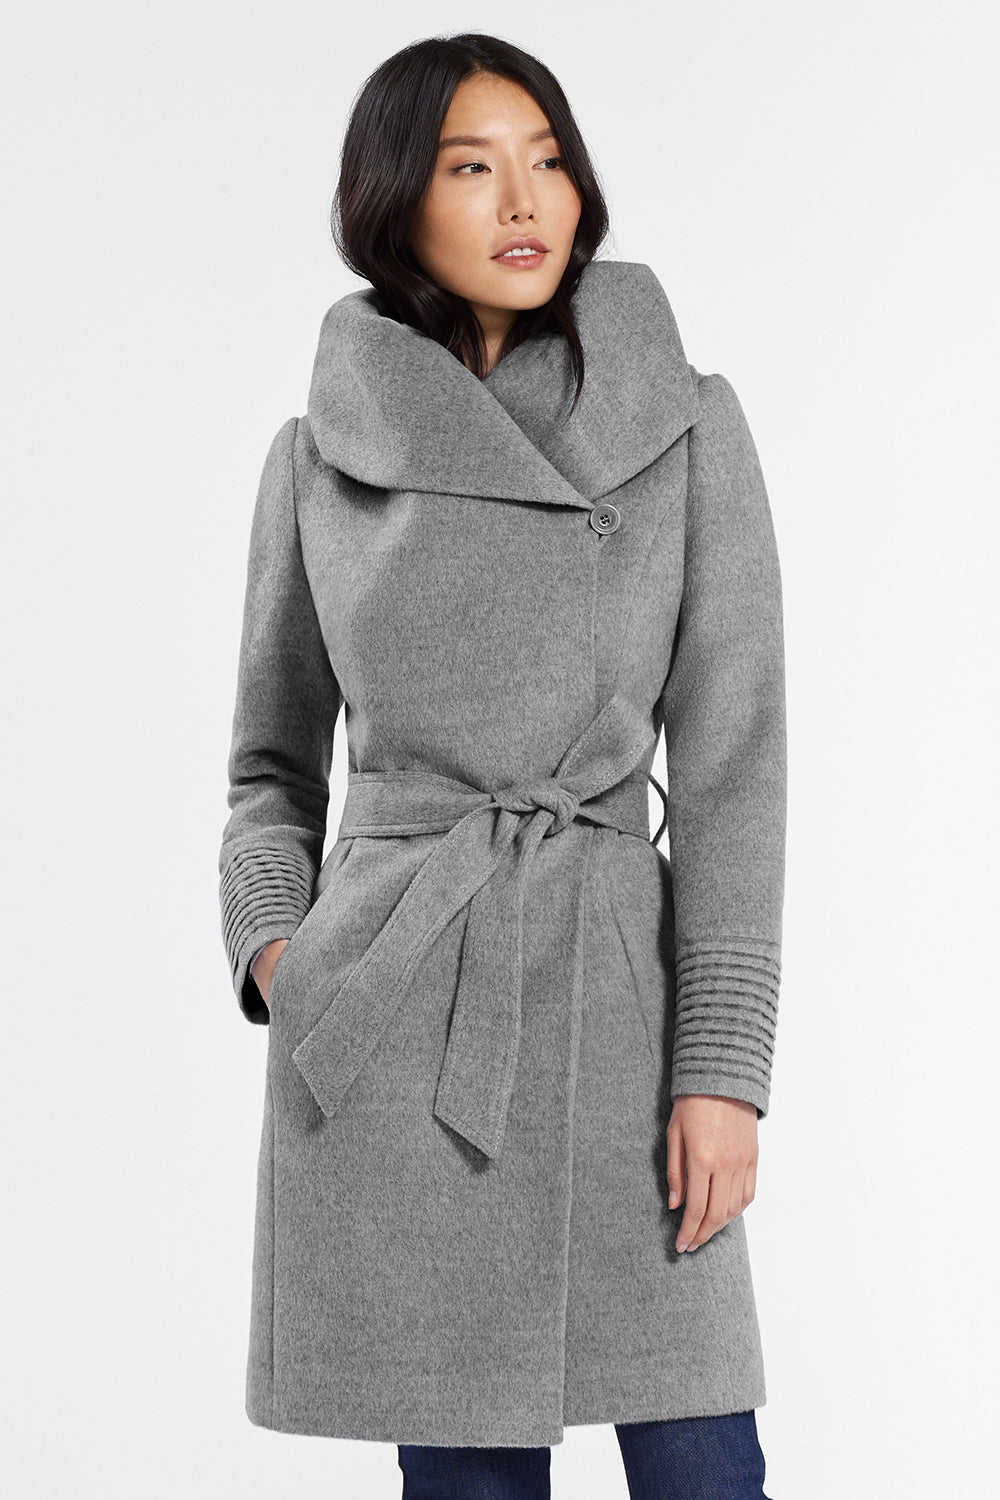  Patch Pocket Belted Hooded Winter Coat (Color : Khaki